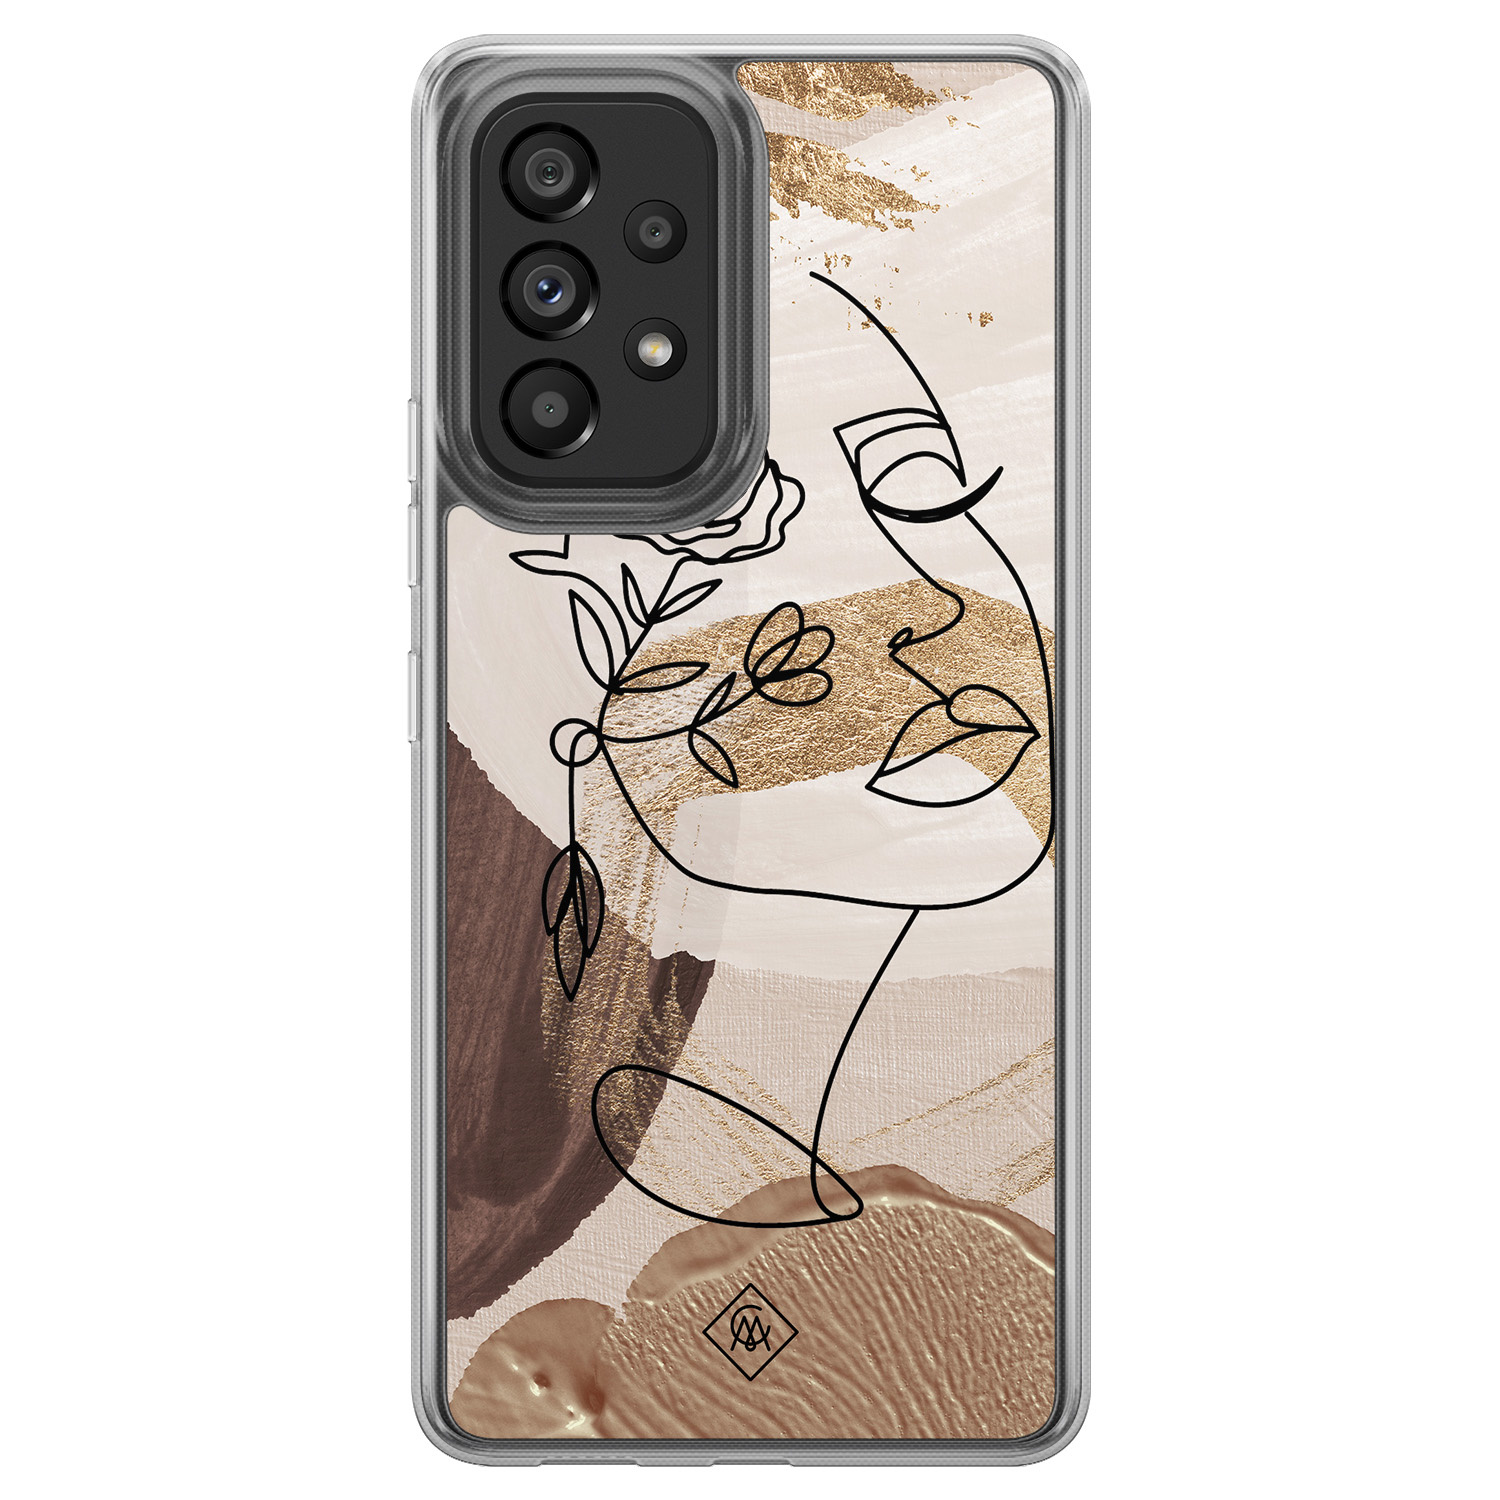 Samsung Galaxy A52 5G hoesje siliconen - Abstract gezicht bruin - Casimoda® 2-in-1 case hybride - Schokbestendig - Geometrisch patroon - Verhoogde randen - Bruin/beige, Transparant